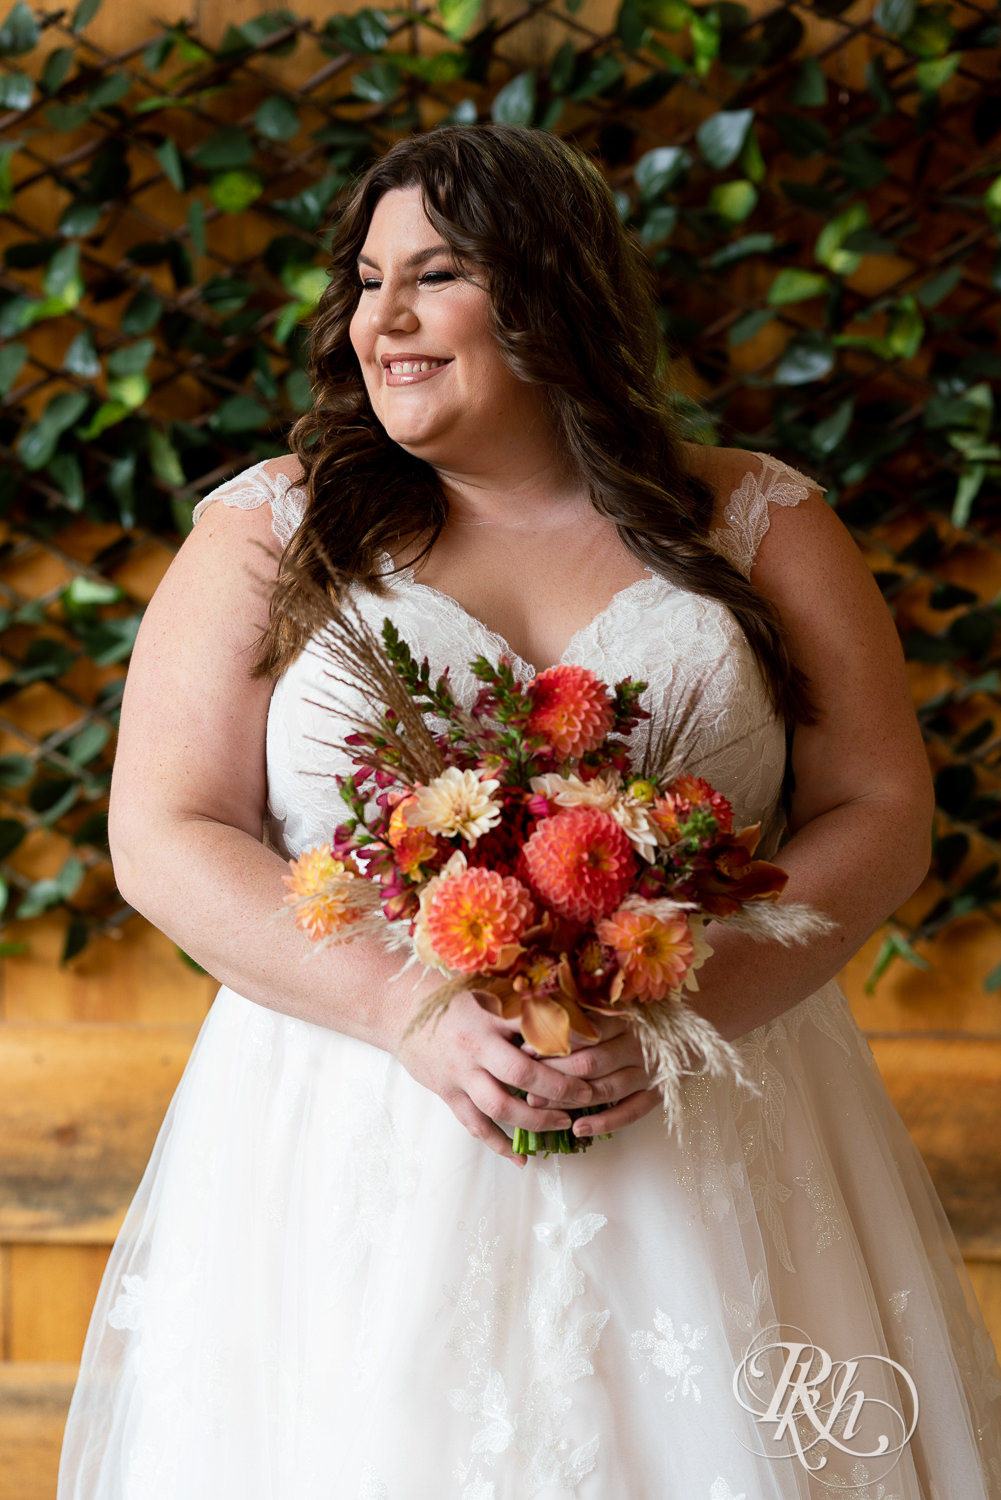 Plus size bride holding flowers in wedding dresses in Minneapolis, Minnesota.